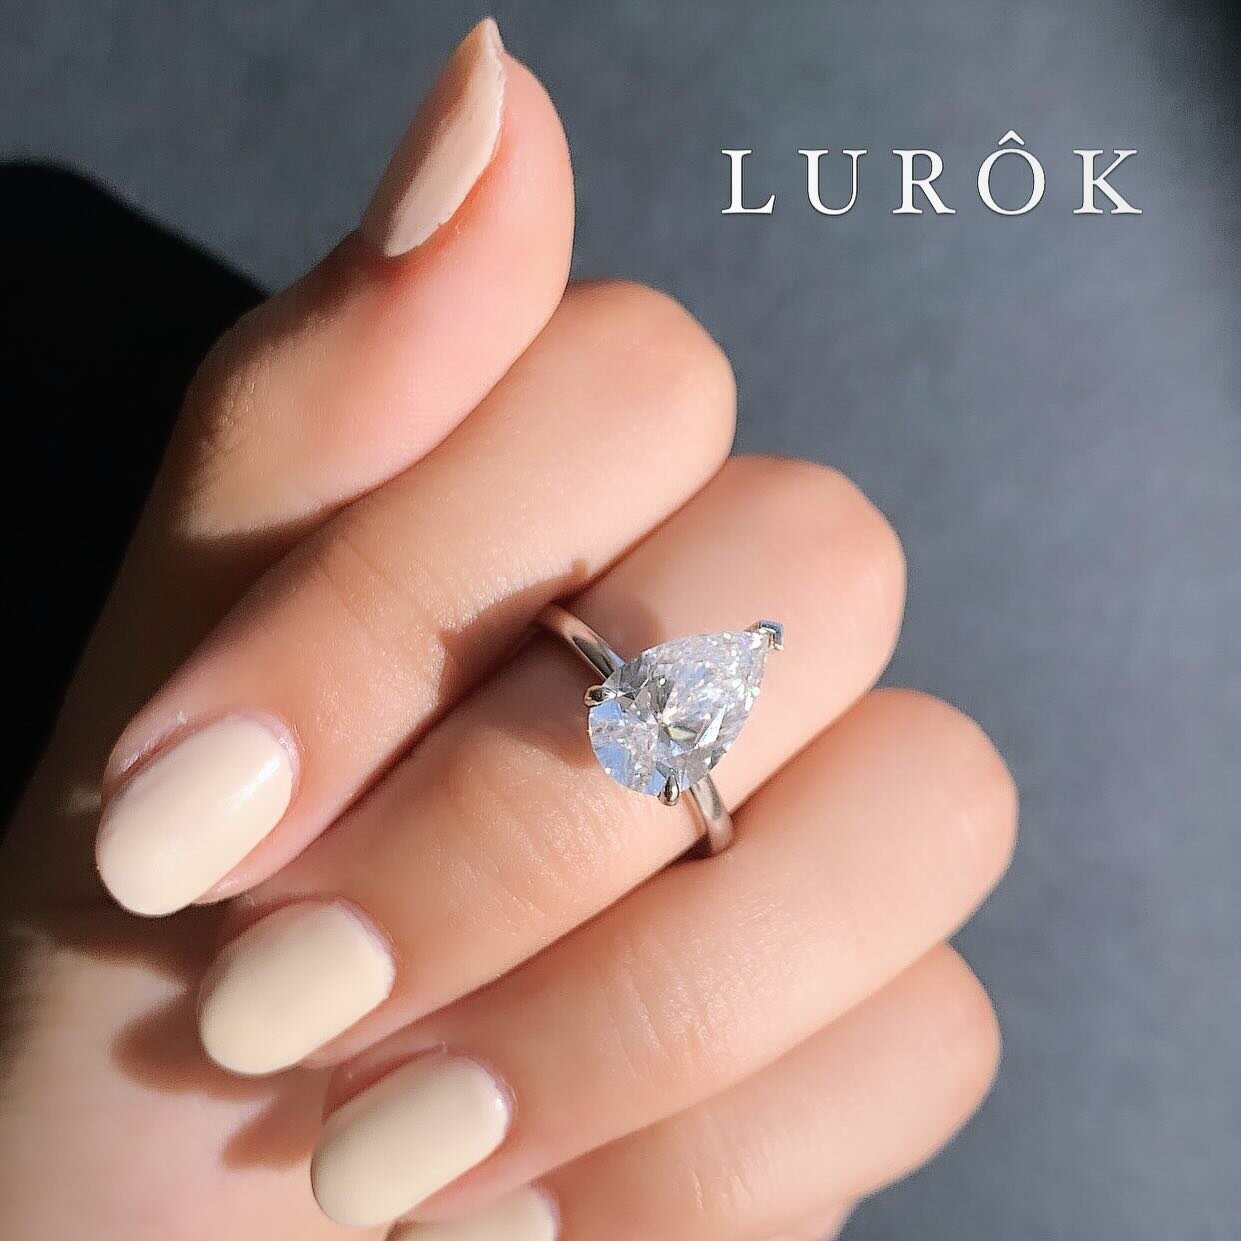 DIAMOND 💎 The Traditional Birthstone for April 🤍 
.
.
.
#diamond #diamondring #finejewelry #goldjewellery #jewelrydesigner #diamonds #engagement #engagementring #bridal #bridaljewellery #luxury #luxuryjewelry